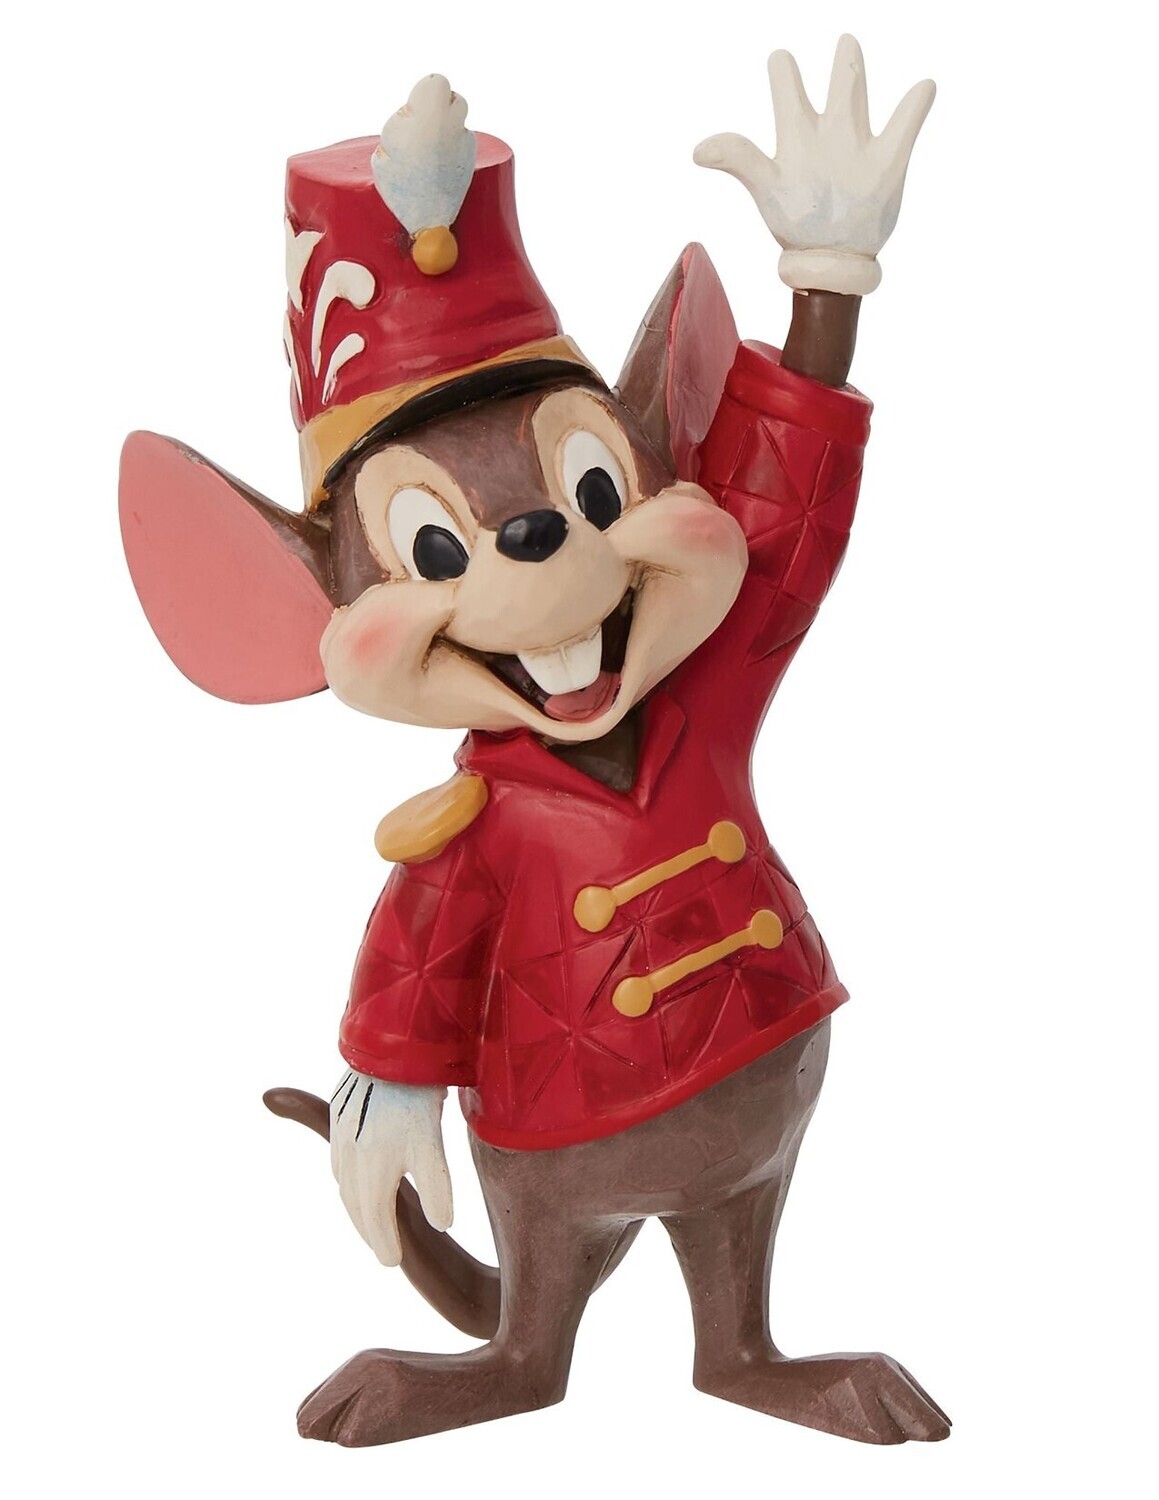 Jim Shore Disney Traditions "Timothy Mouse Mini" Figurine (6010889)